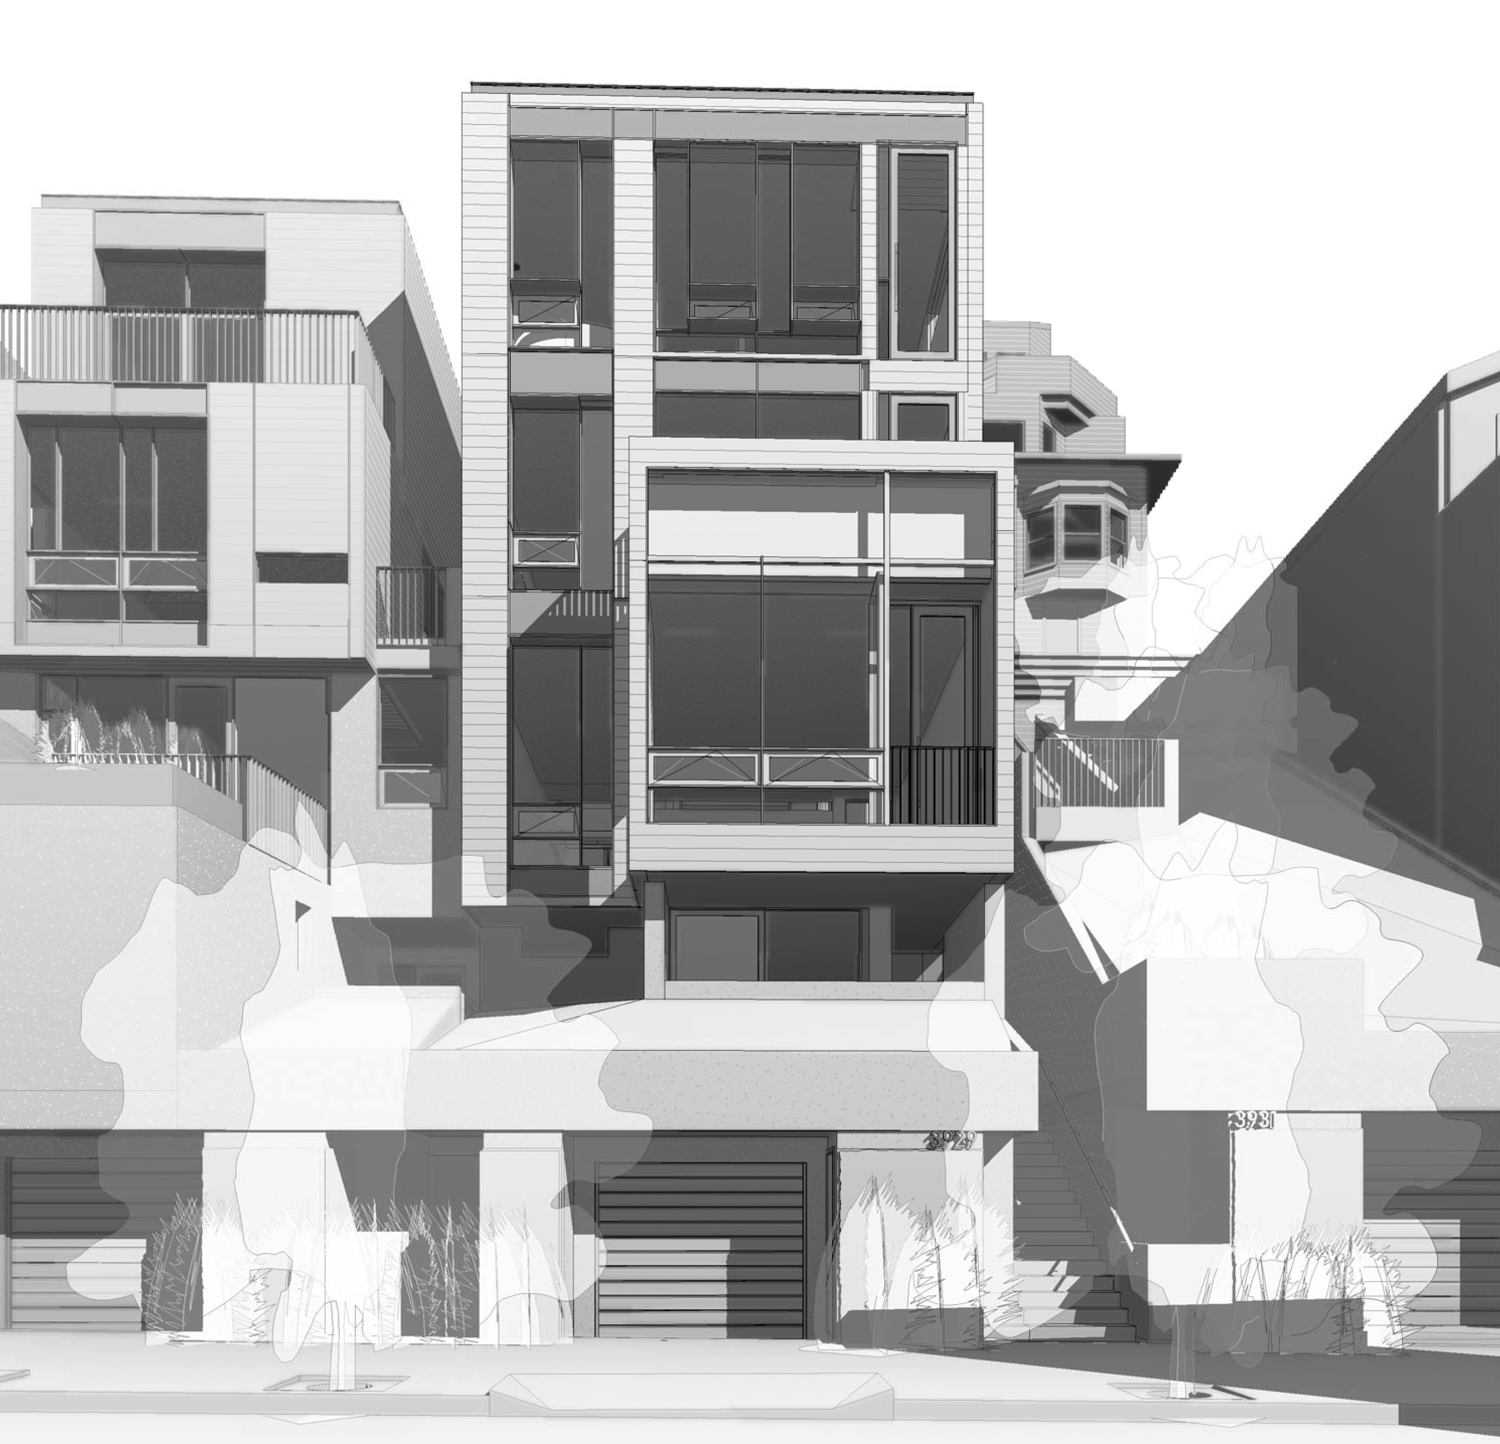 3929 19th Street facade, design by Studio 12